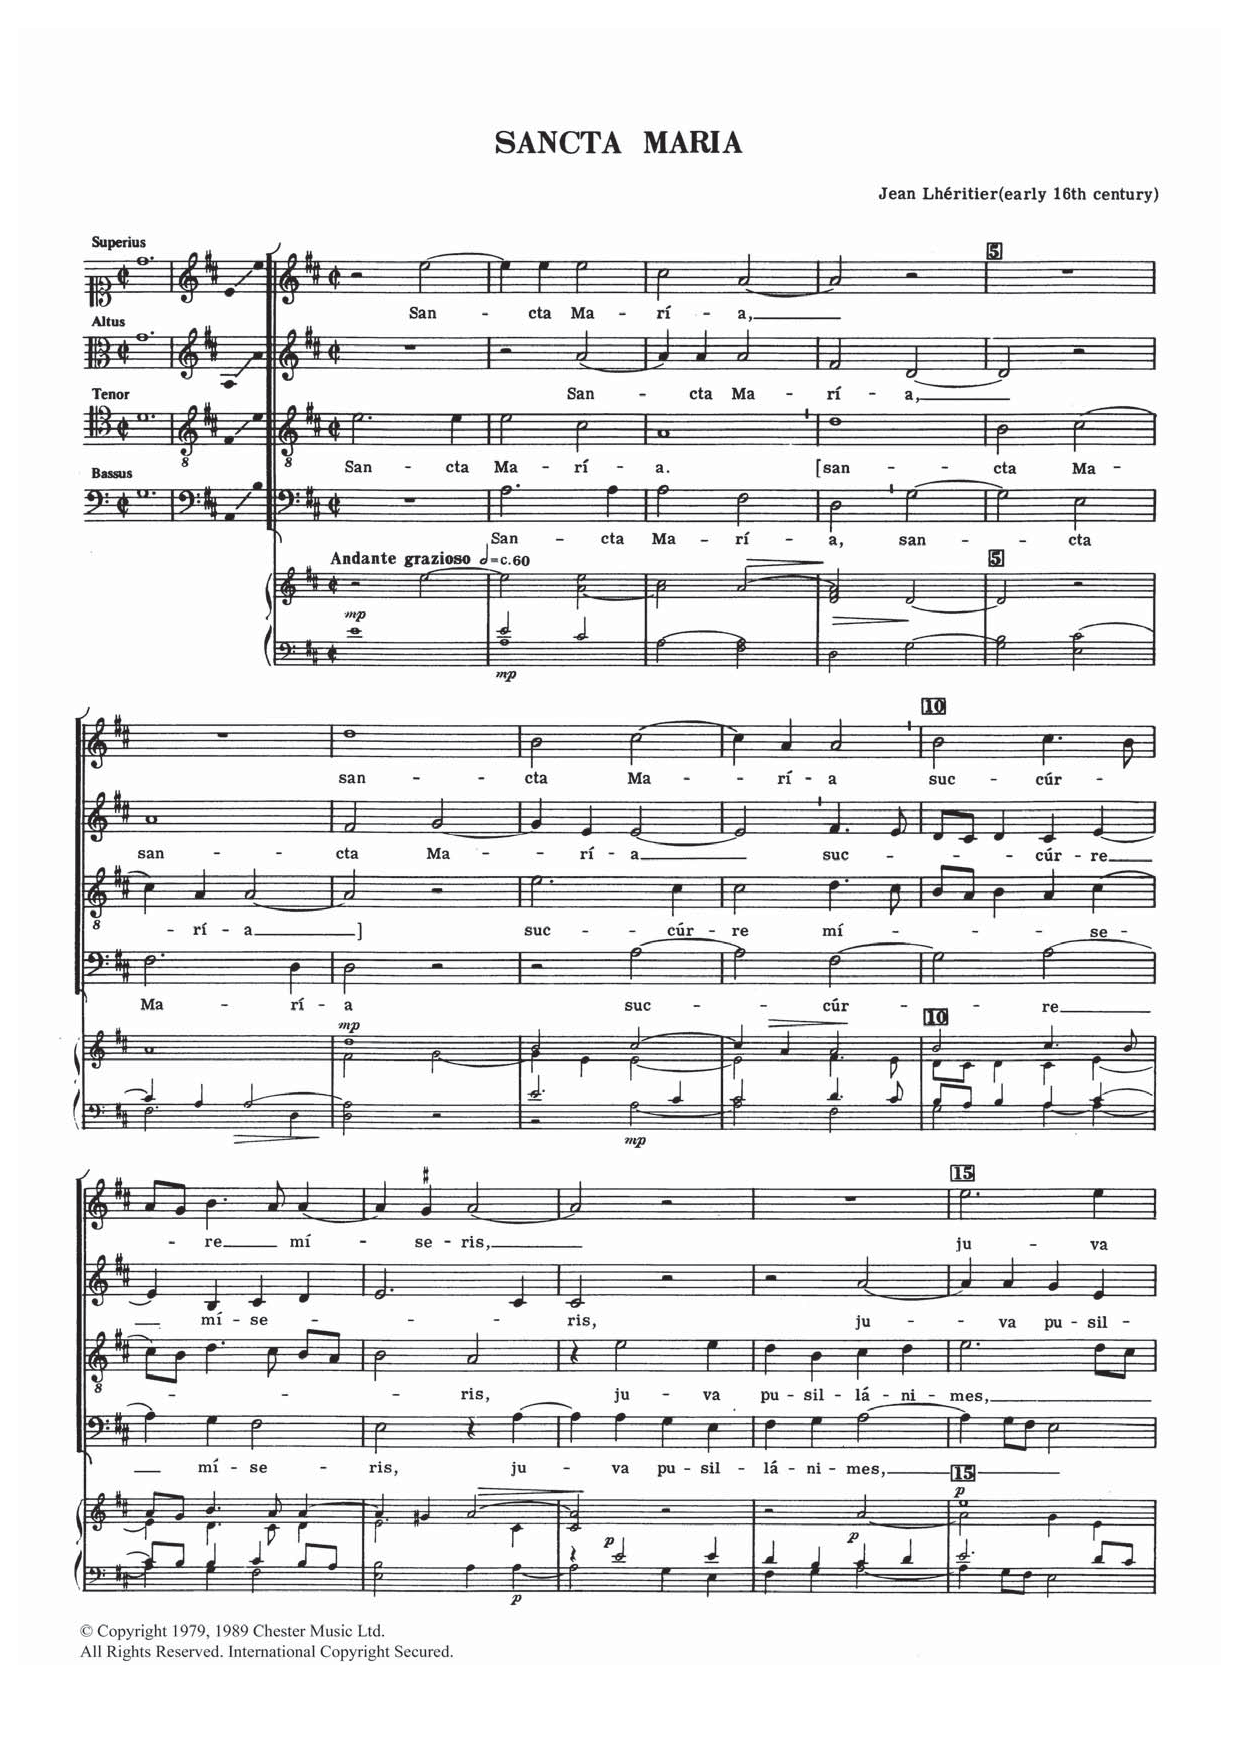 Jean Lheritier Sancta Maria sheet music notes and chords arranged for Choir